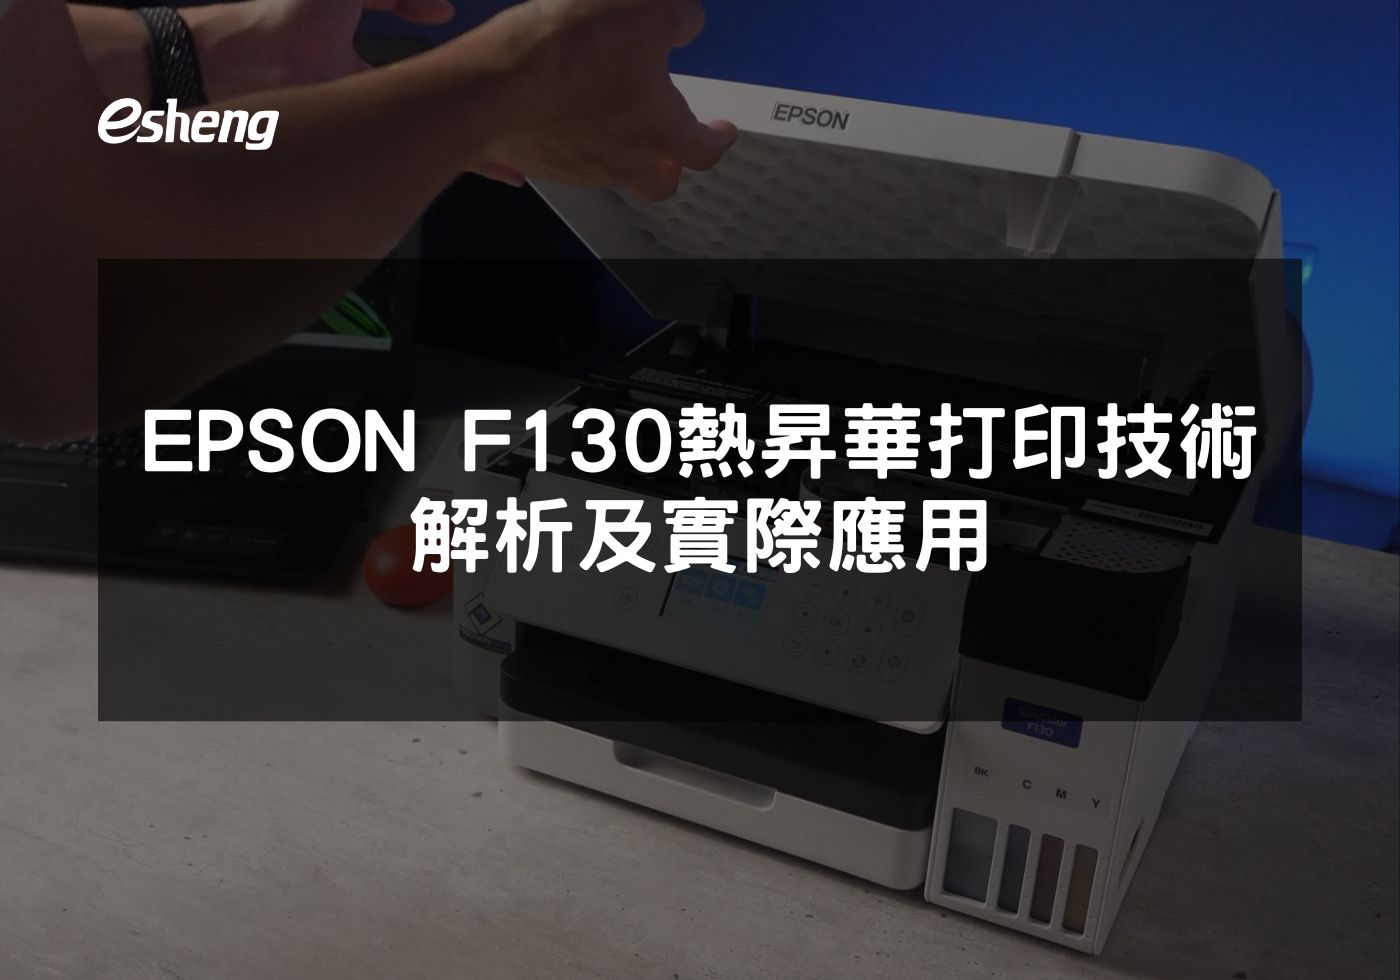 EPSON F130熱昇華印表機實現多材質高解析度打印